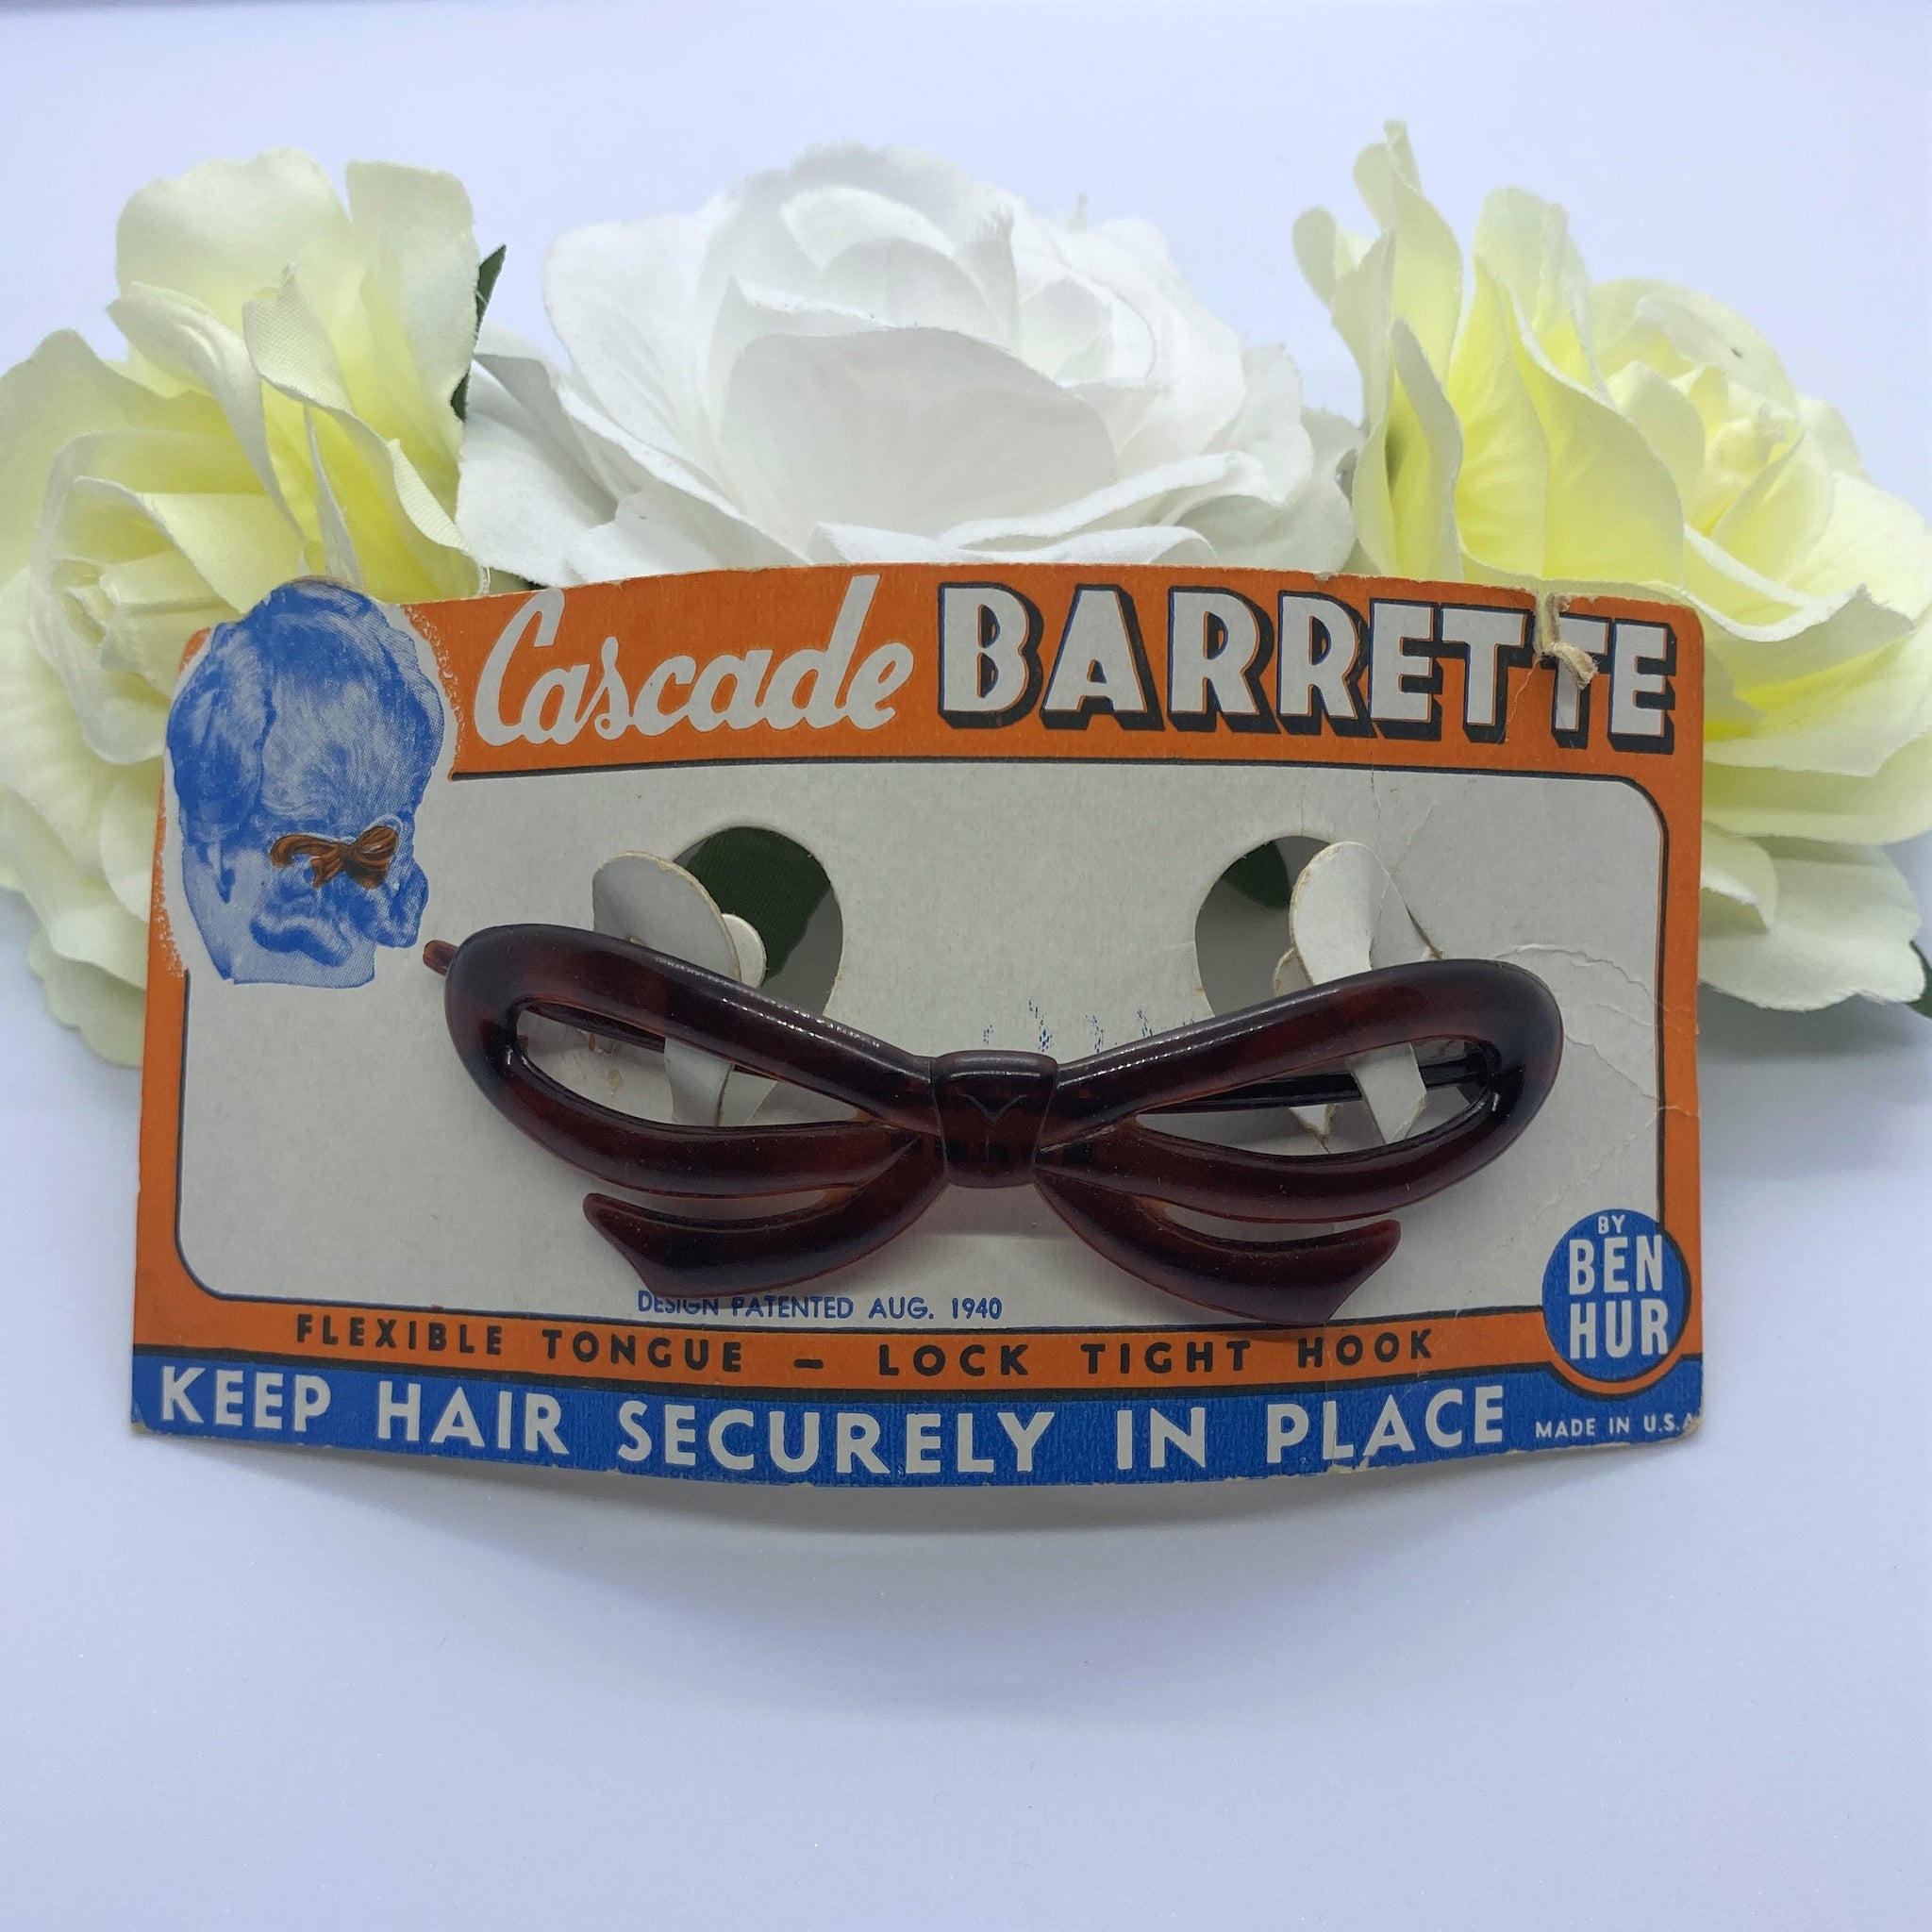 1950s Vintage Hair Barrette